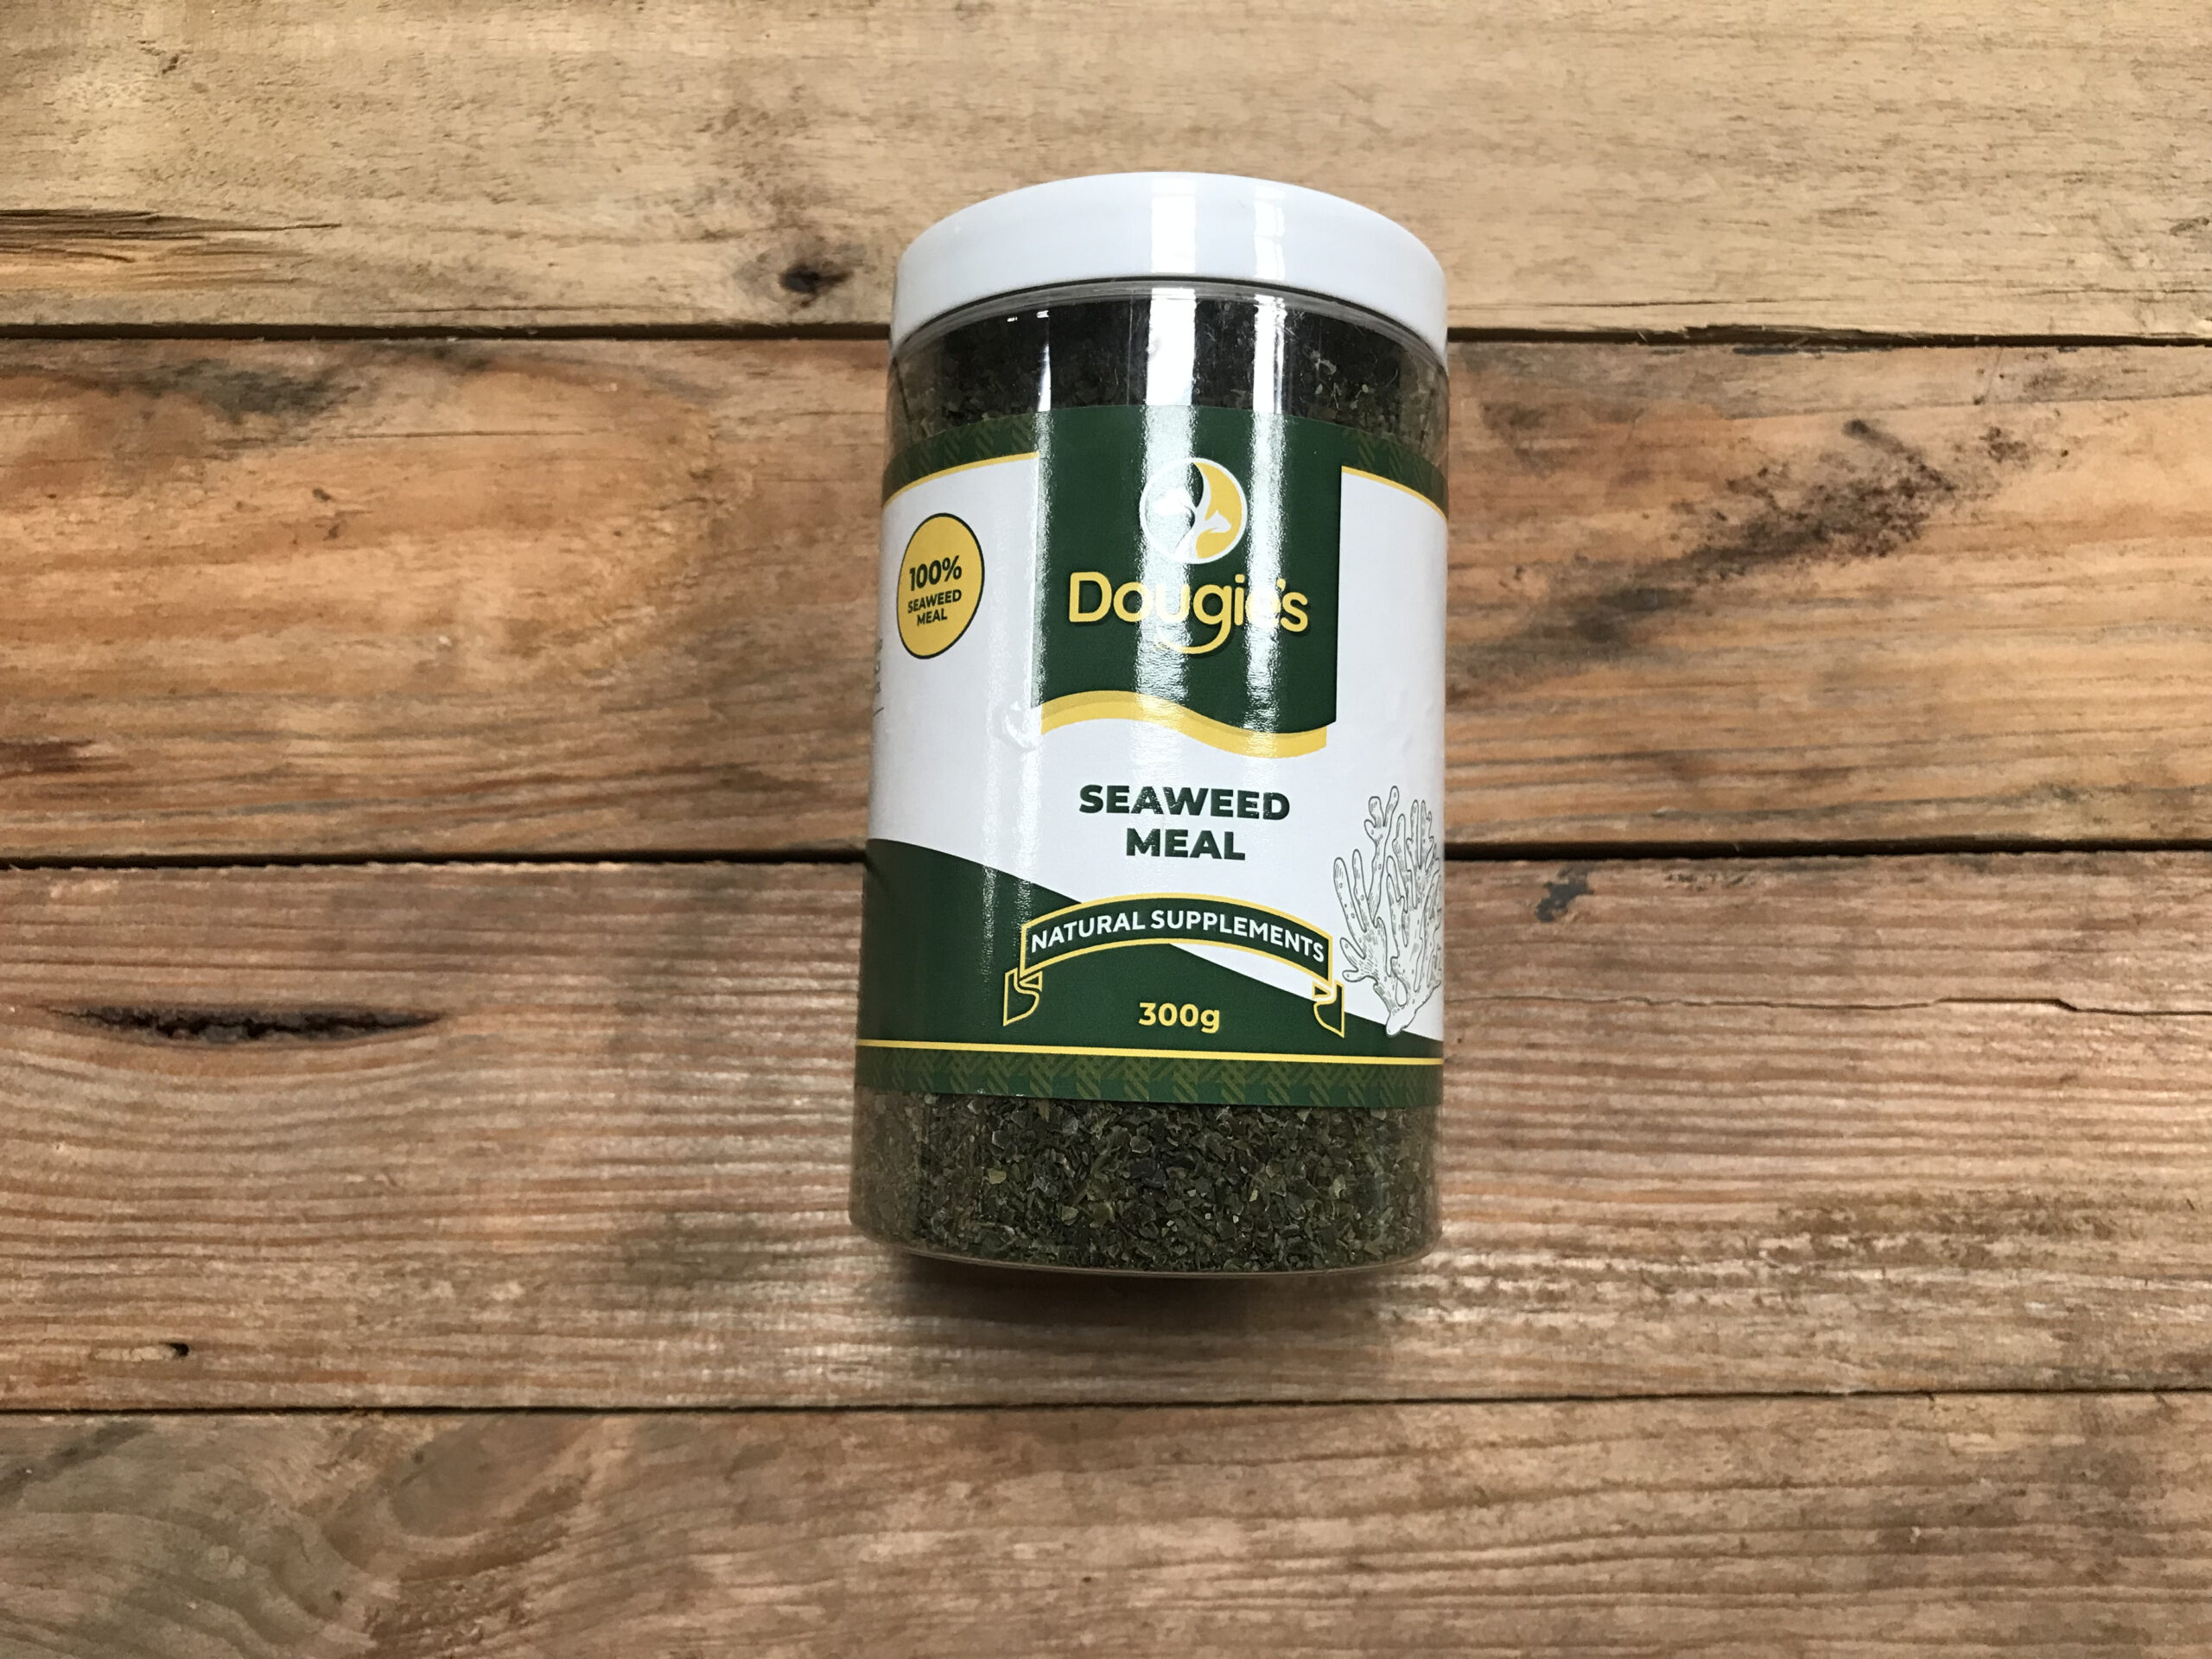 Dougies Seaweed Meal – 300g